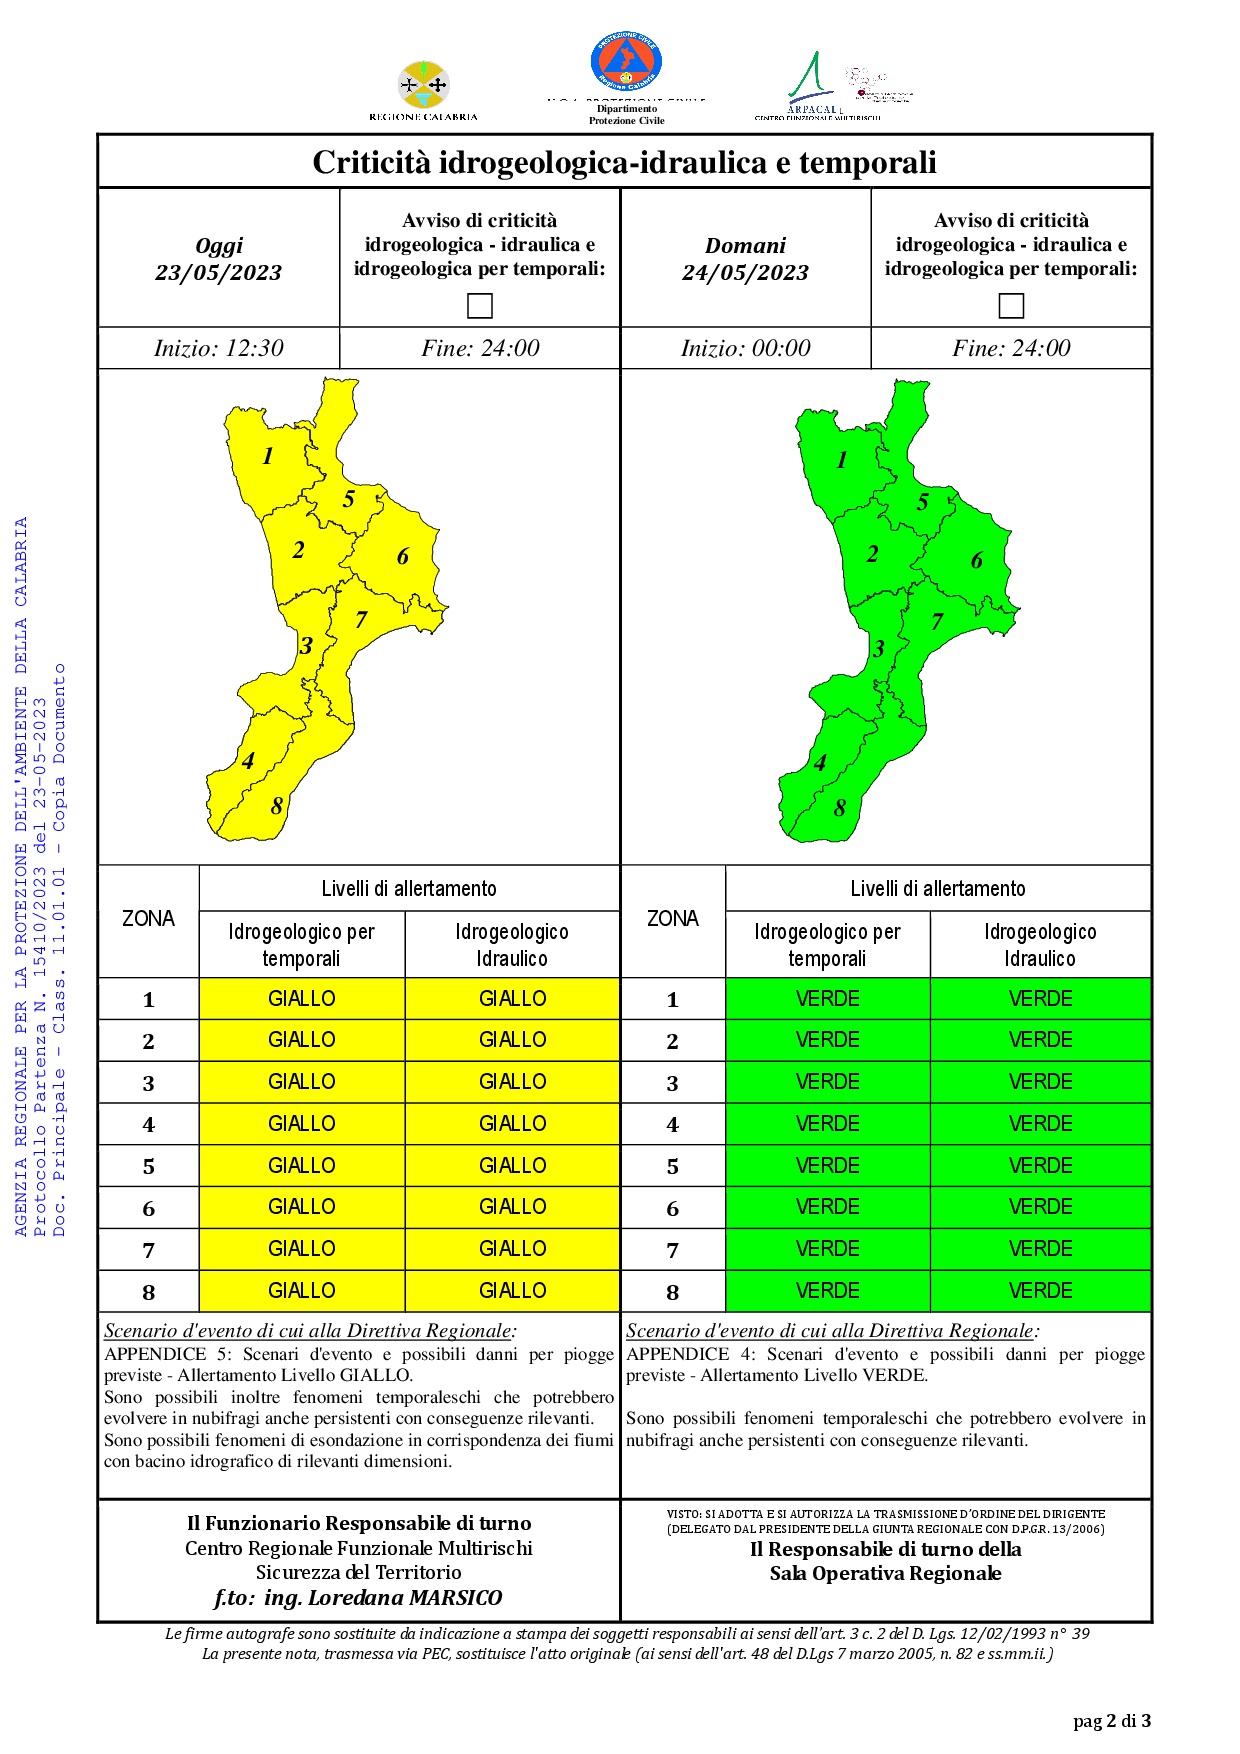 Criticità idrogeologica-idraulica e temporali in Calabria 23-05-2023